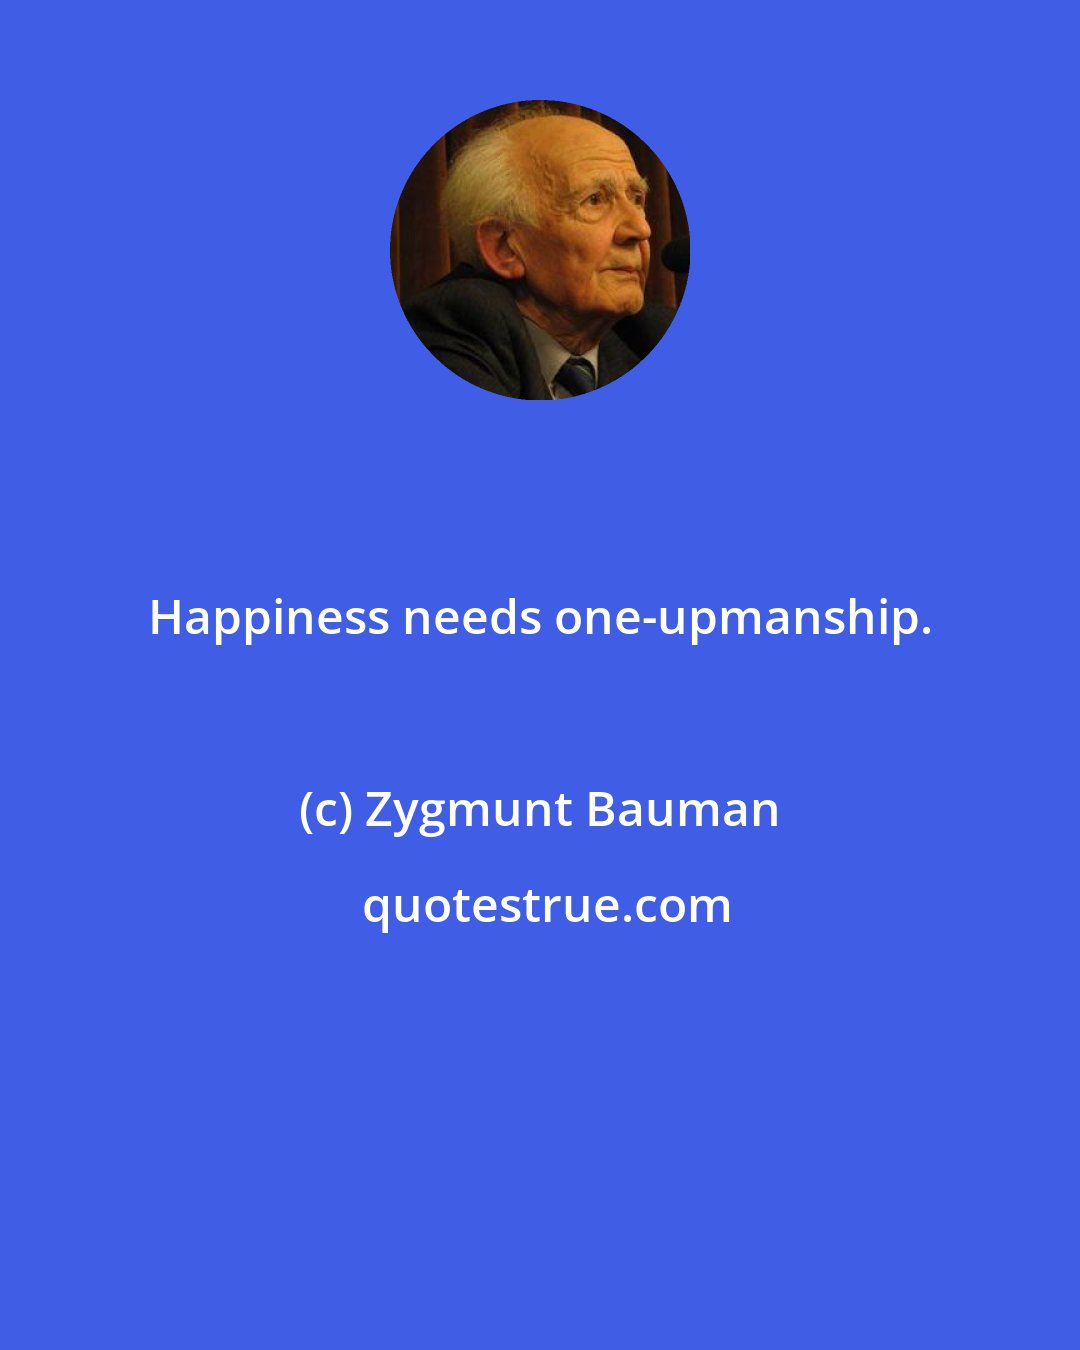 Zygmunt Bauman: Happiness needs one-upmanship.